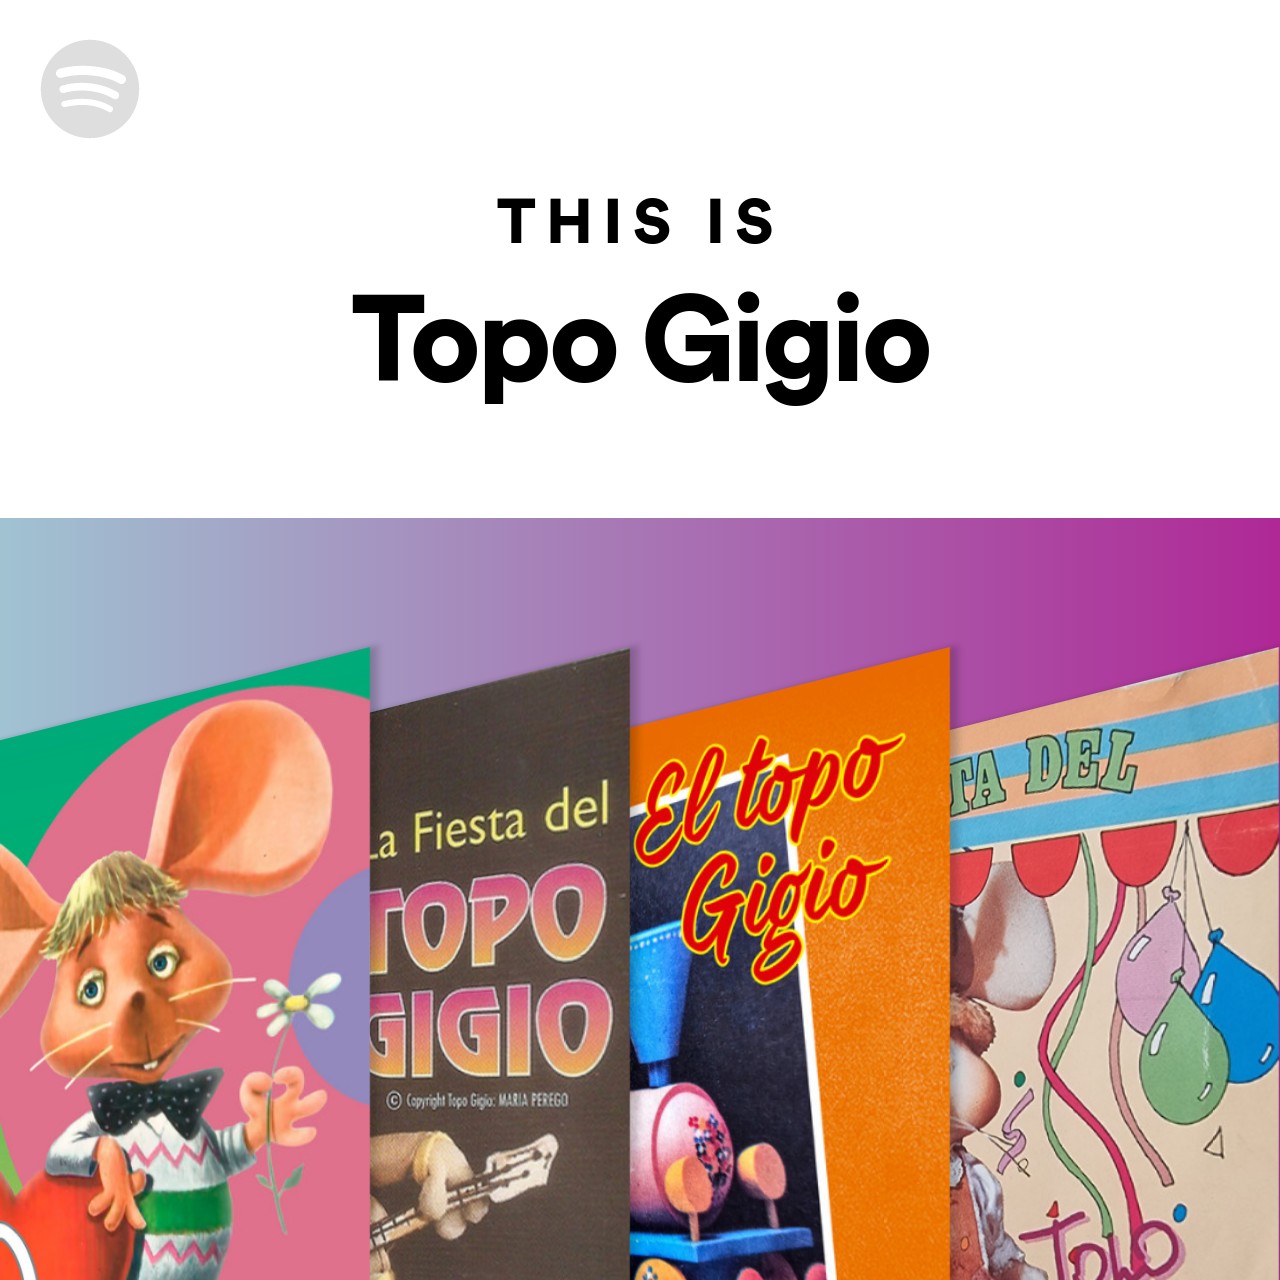 Spotify Playlist This Is Topo Gigio on 